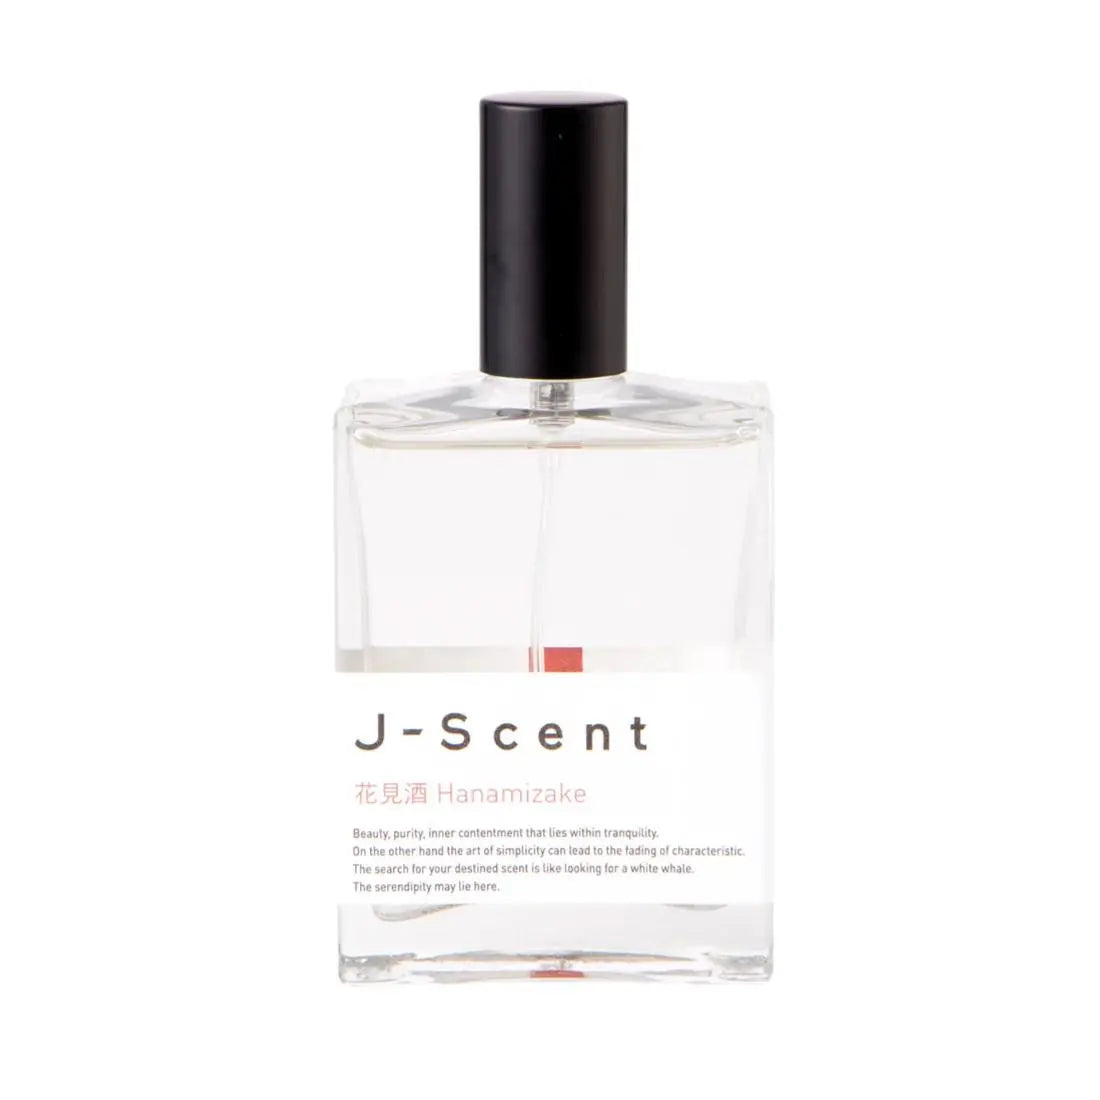 J-scent Hanamizake - 50 ml